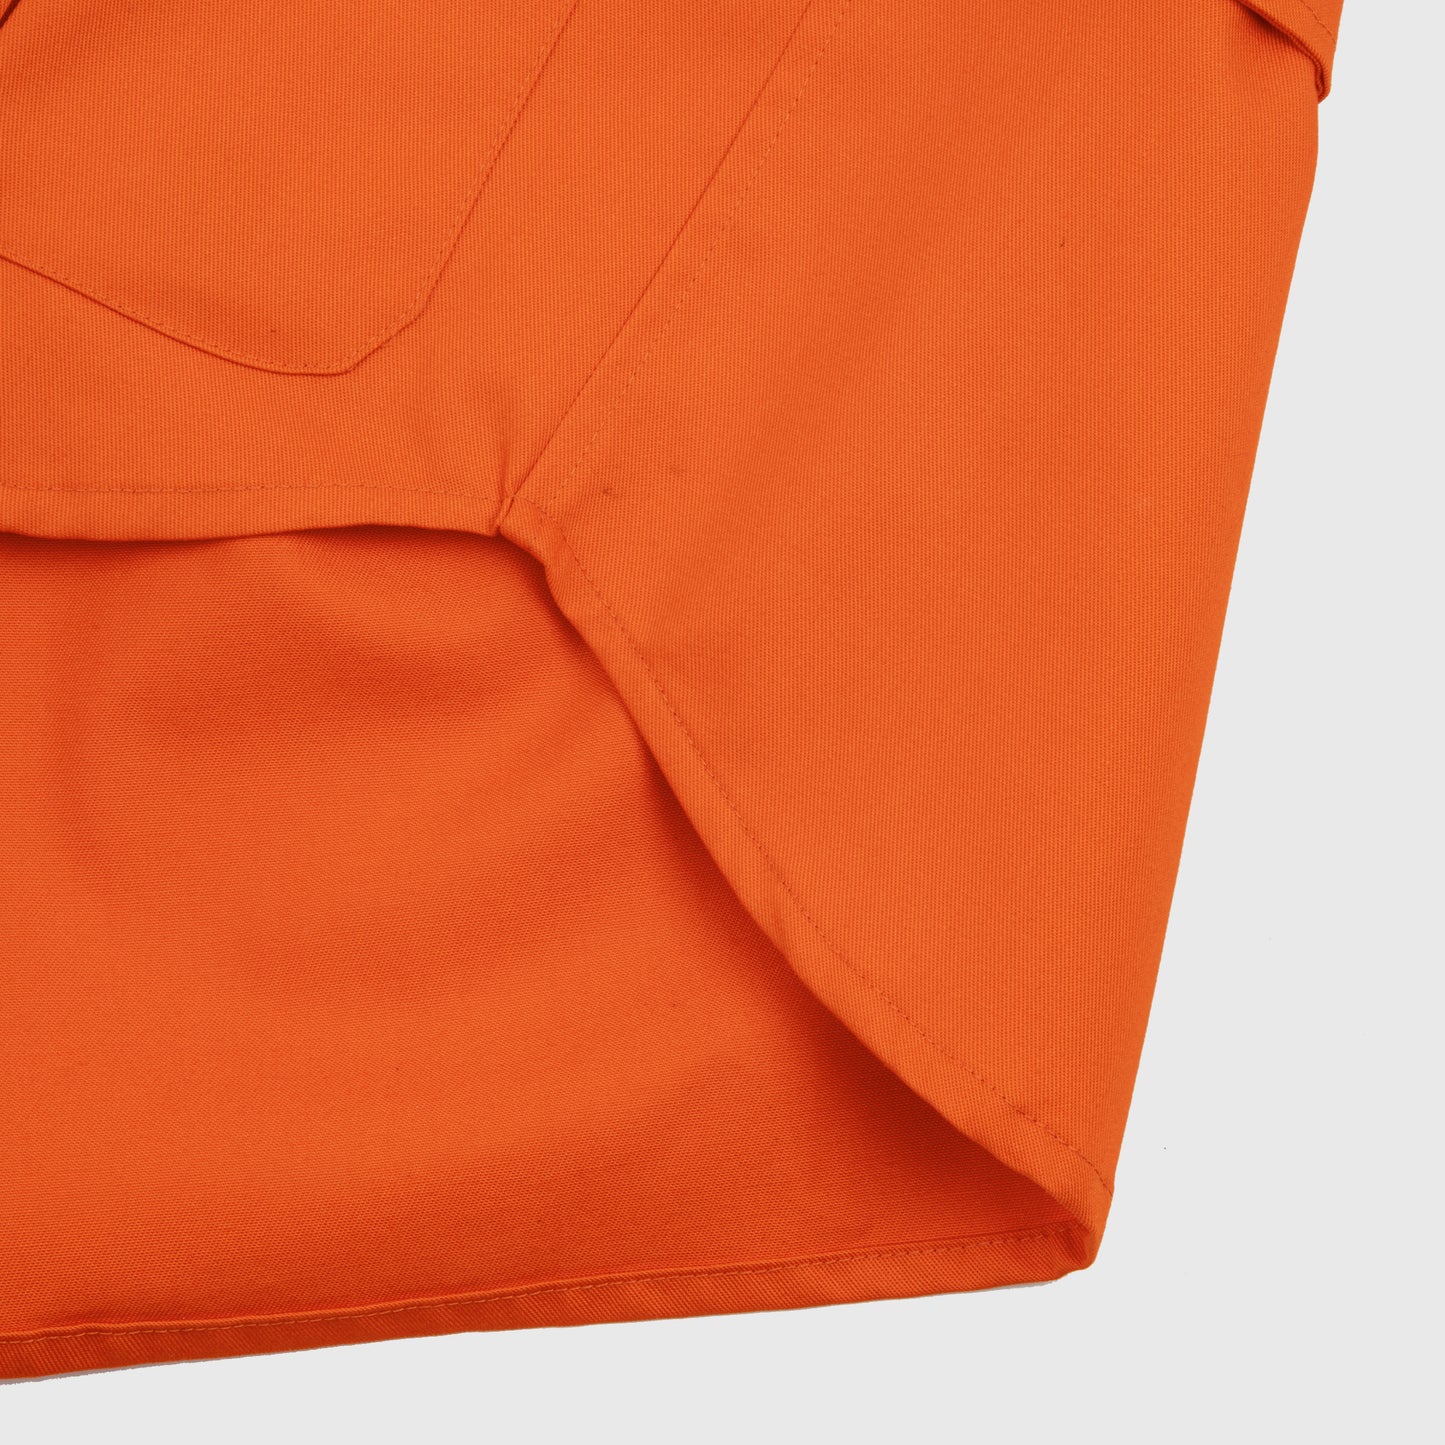 Shirt Jacket with Patch Pockets Orange